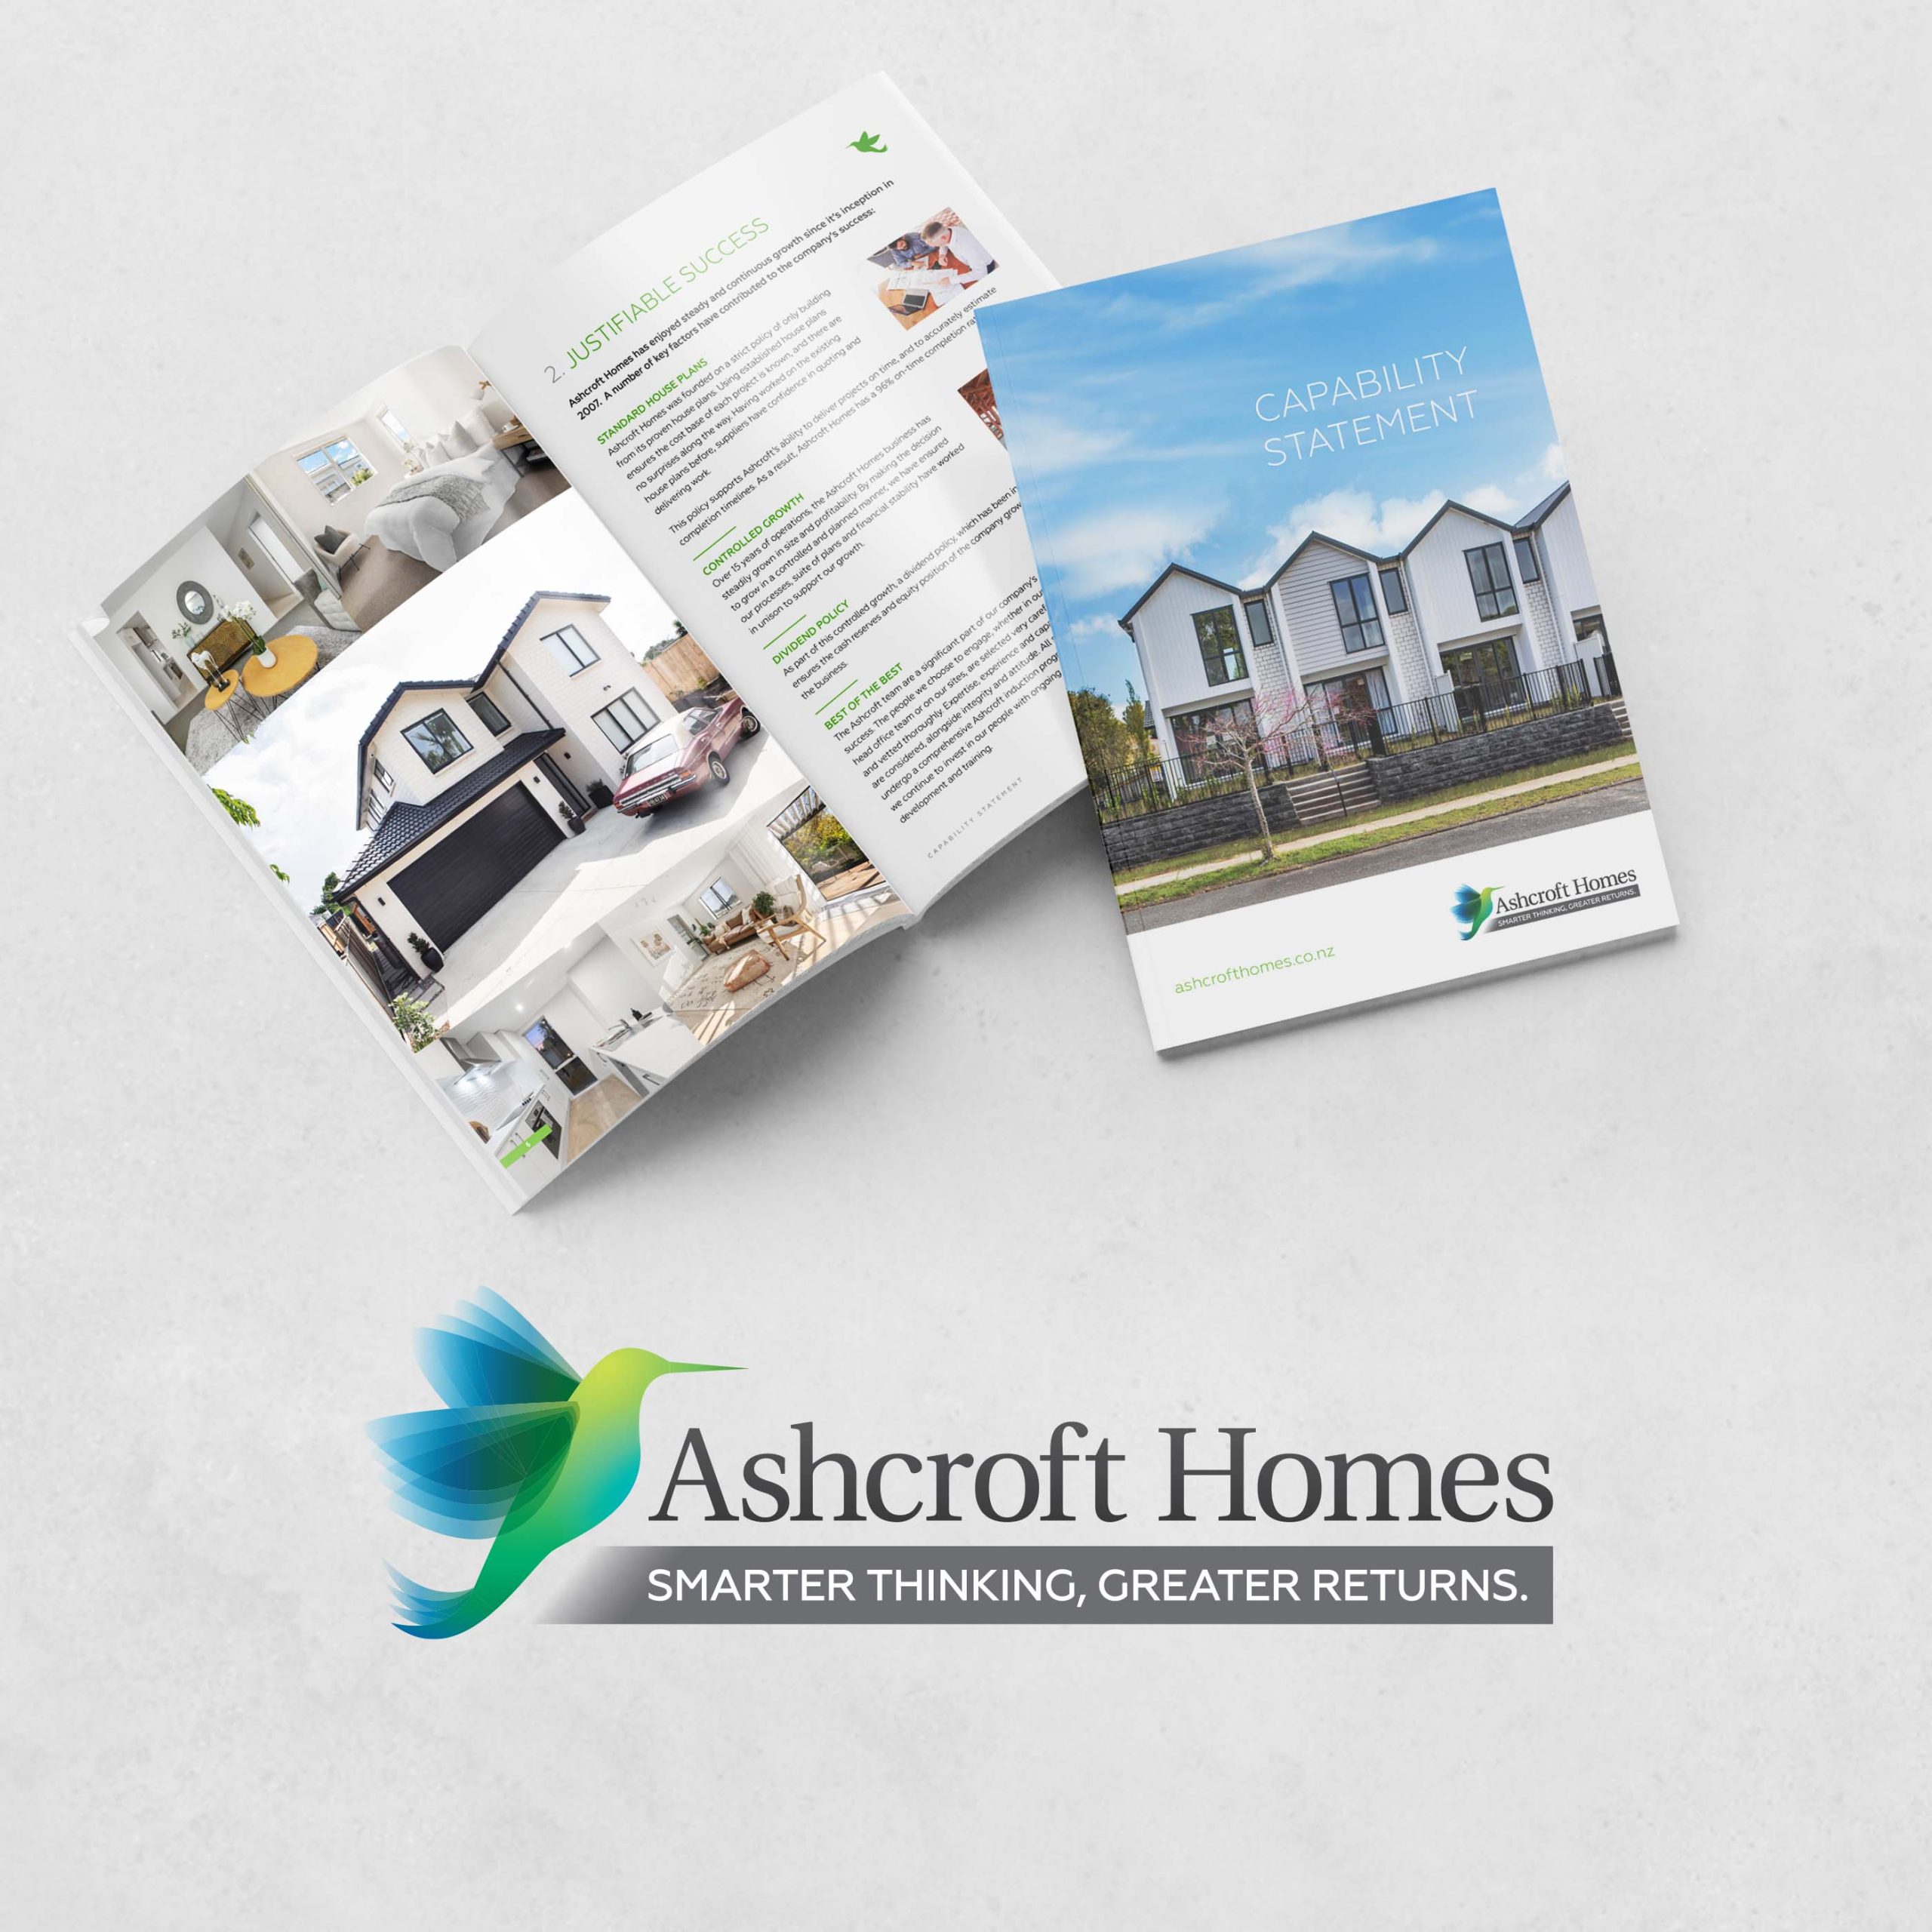 Ashcroft Homes Branding, Design, Advertising and Digital